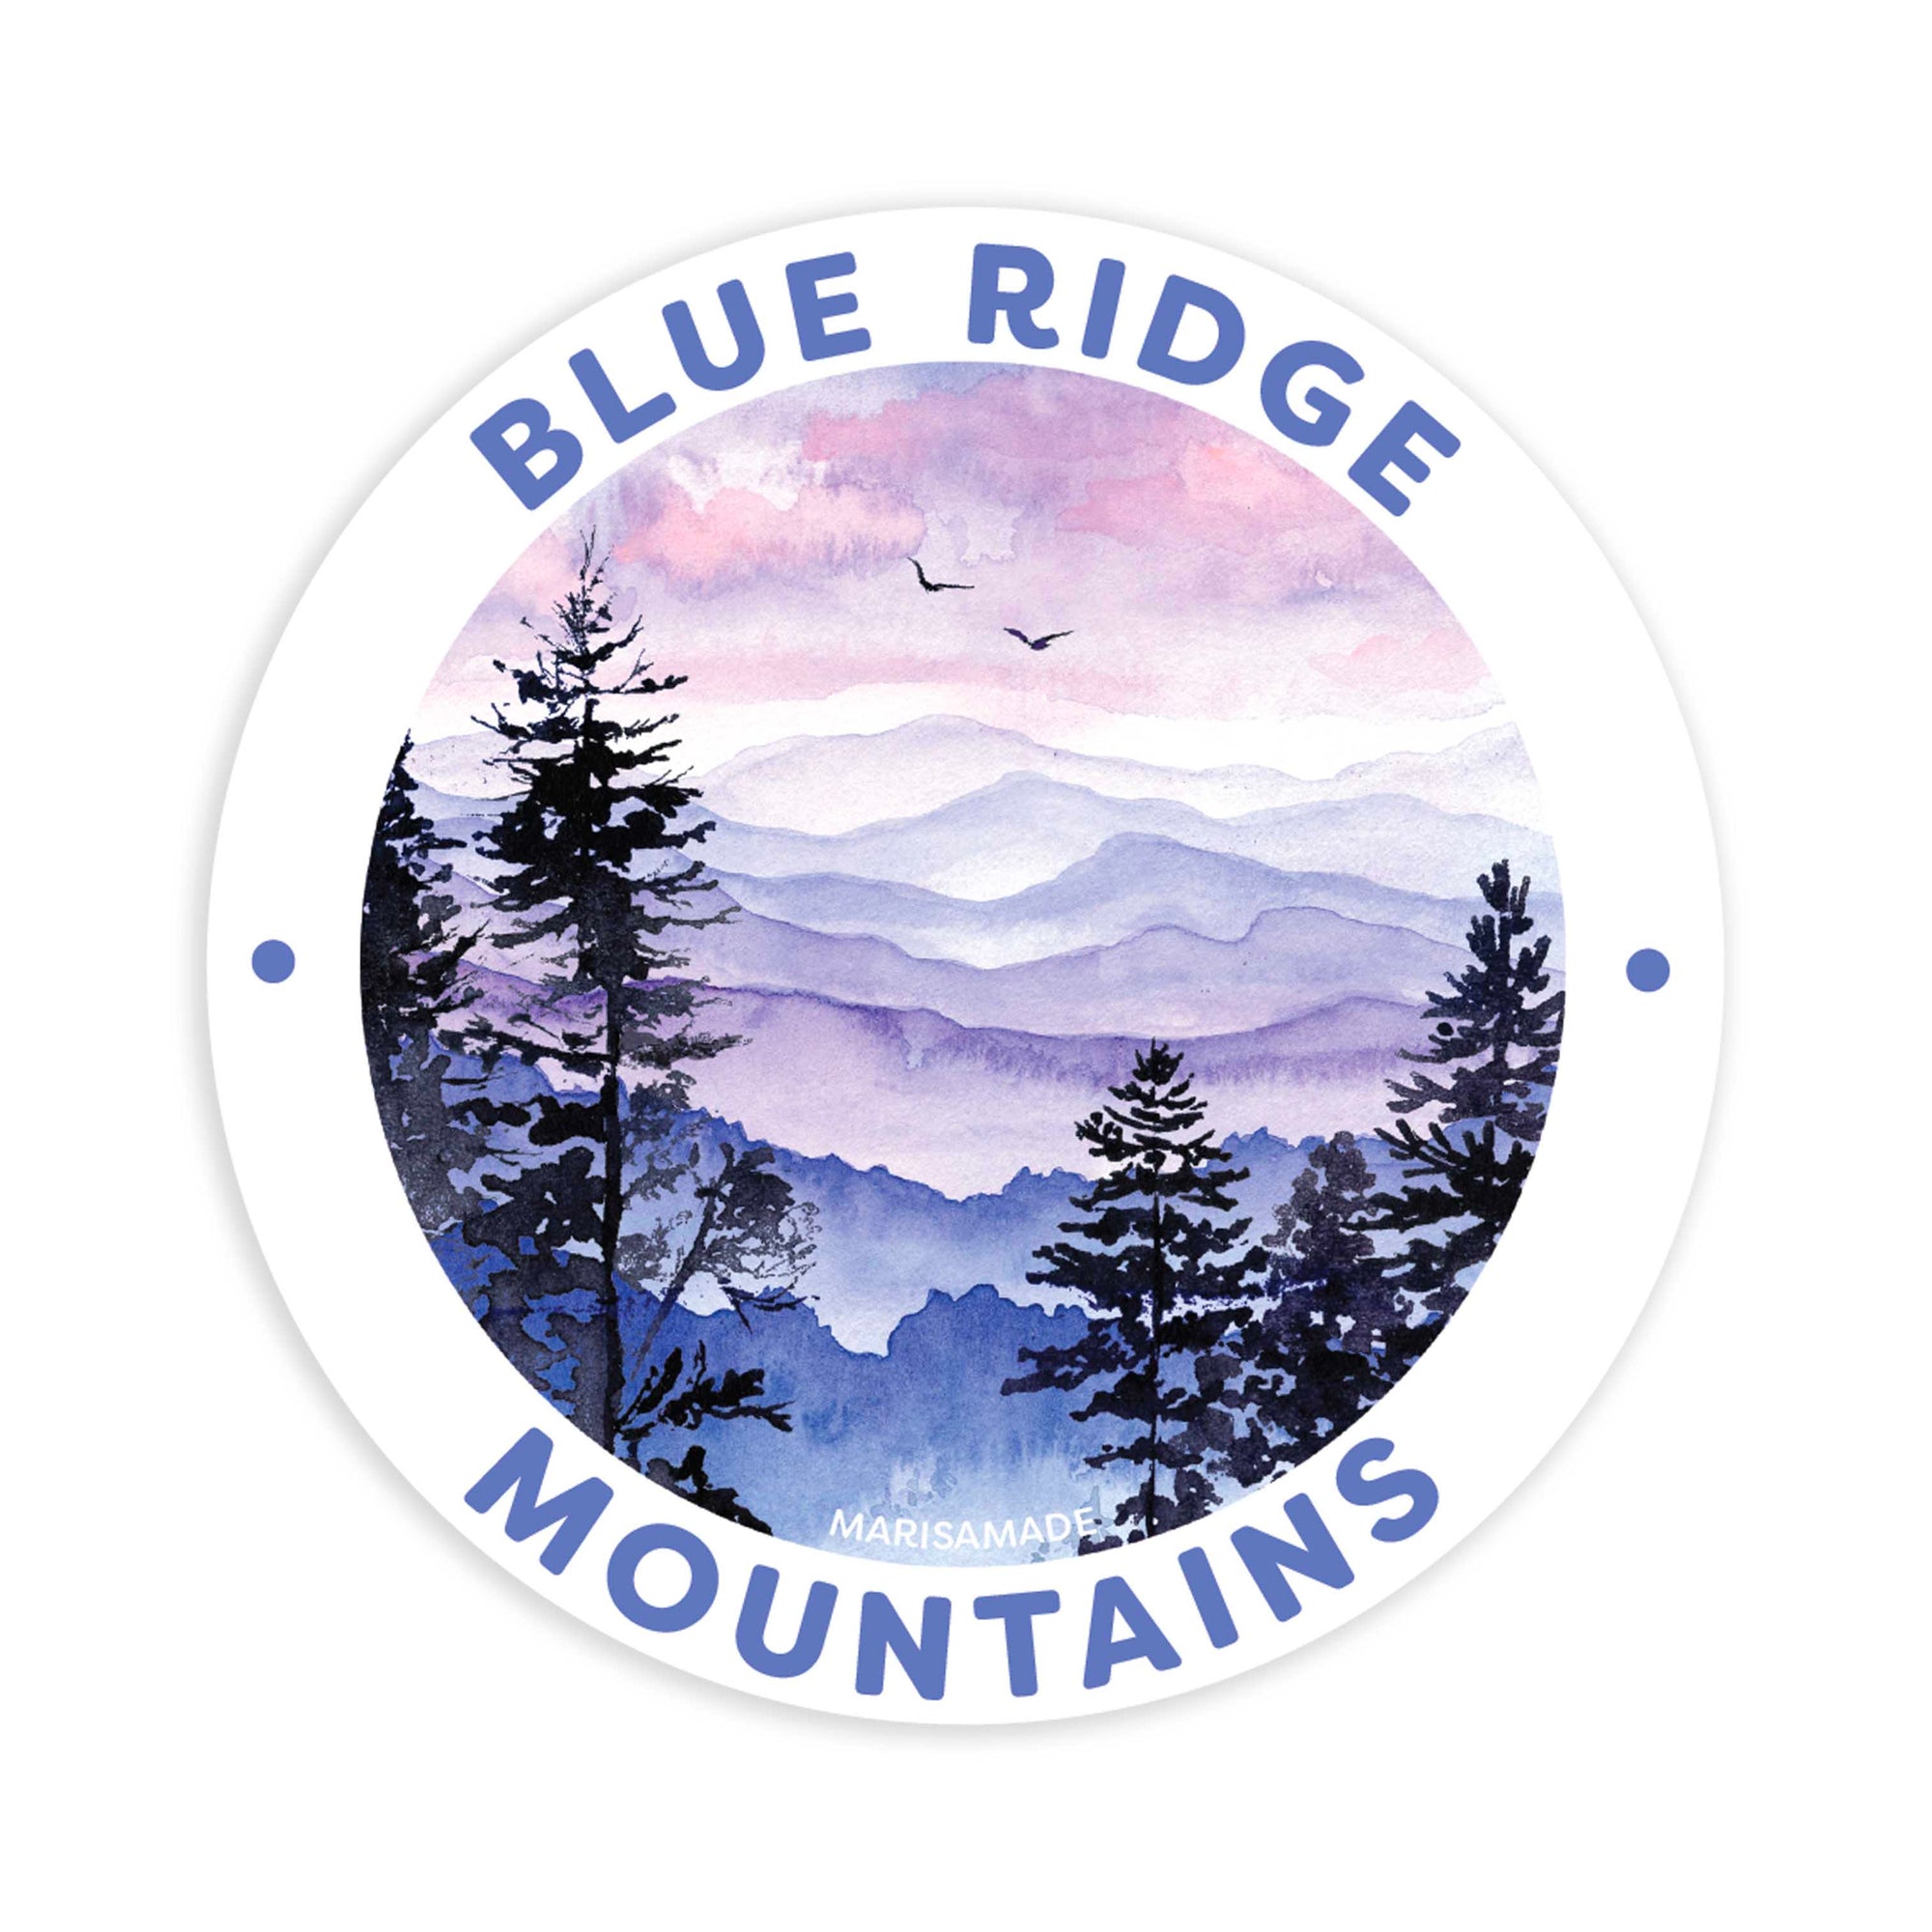 Blue Ridge Mountains Sticker